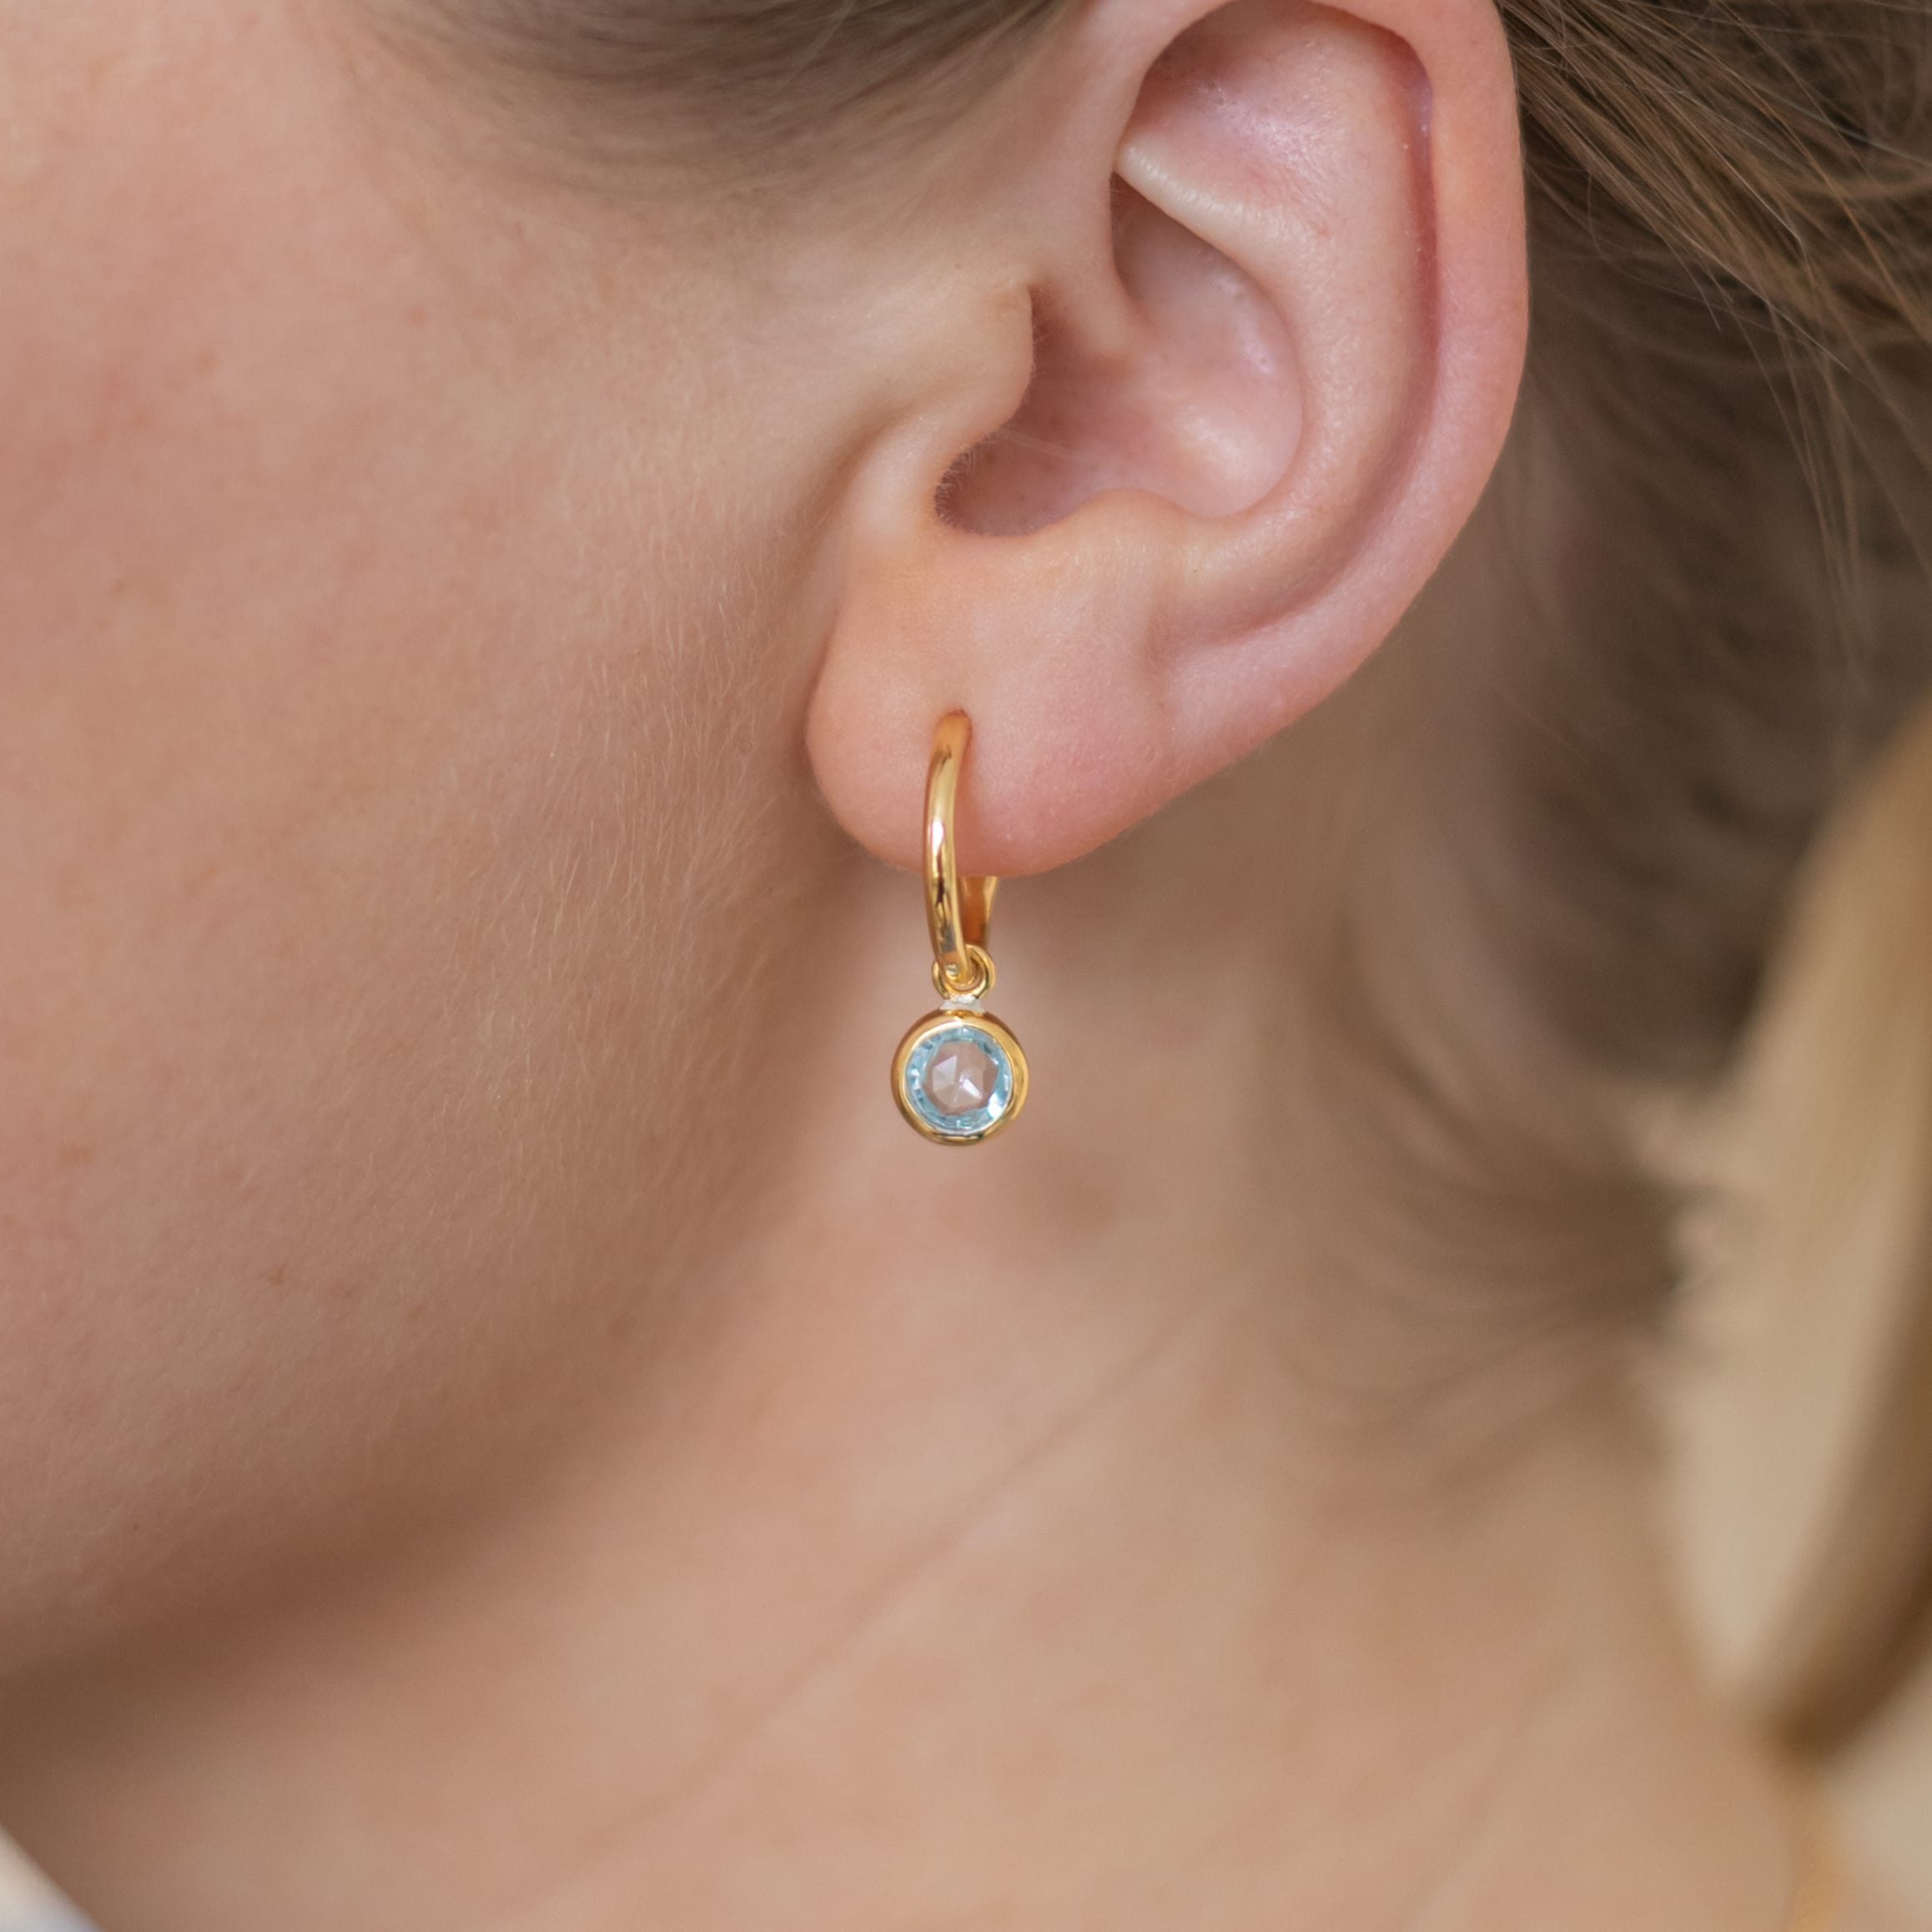 November Birthstone Silver Hoop Earrings - Citrine (Charm sold with hoops or individually)